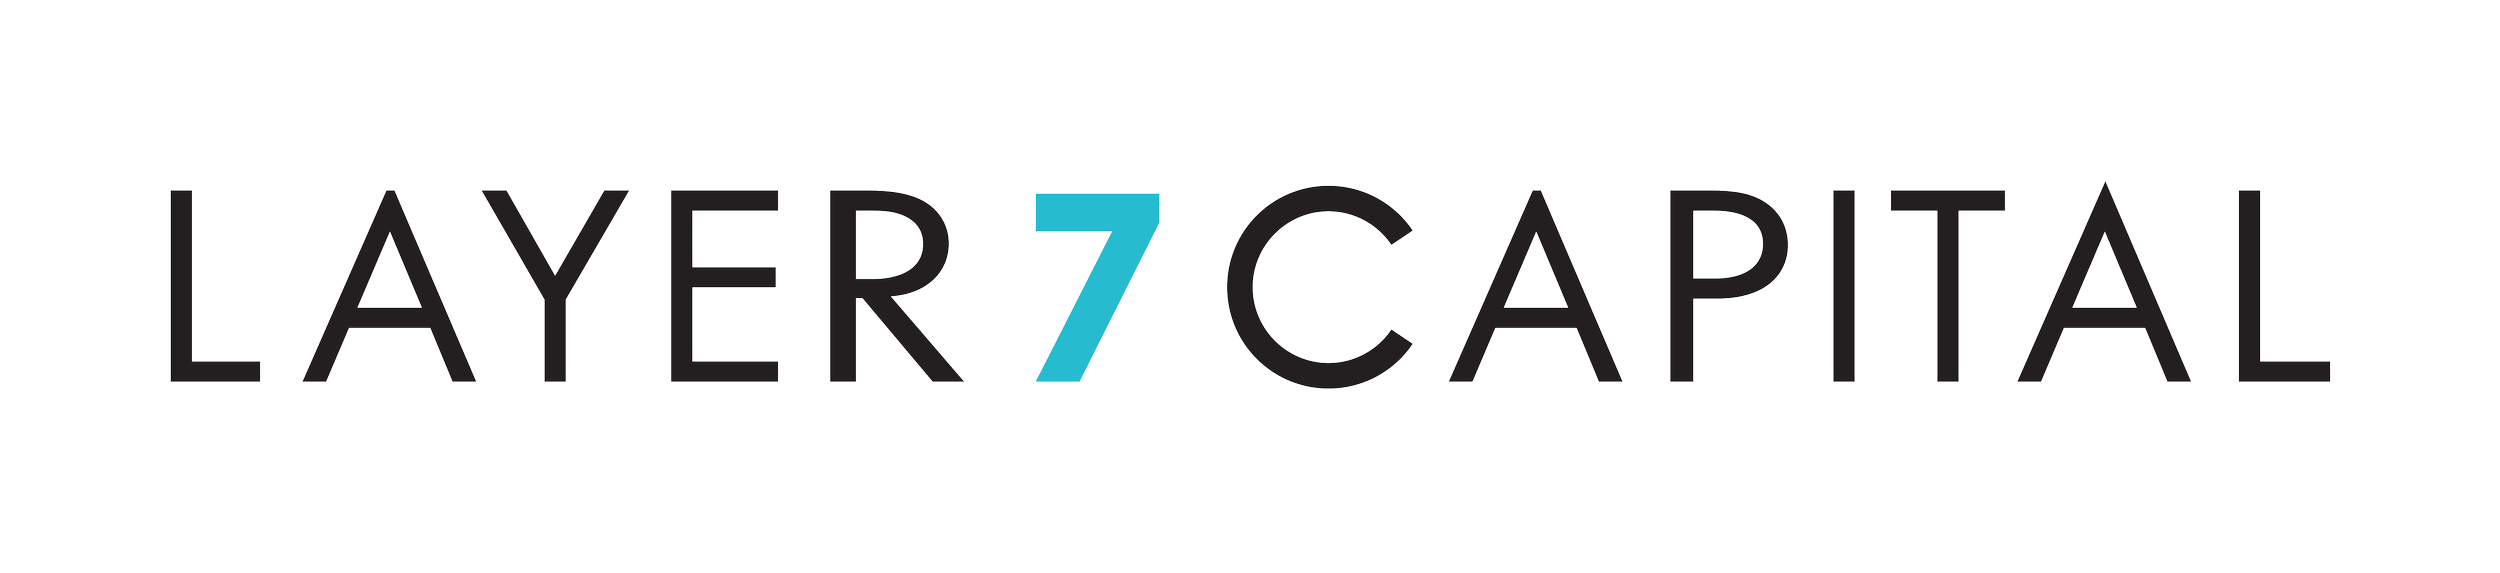 layer7capital-logo.png